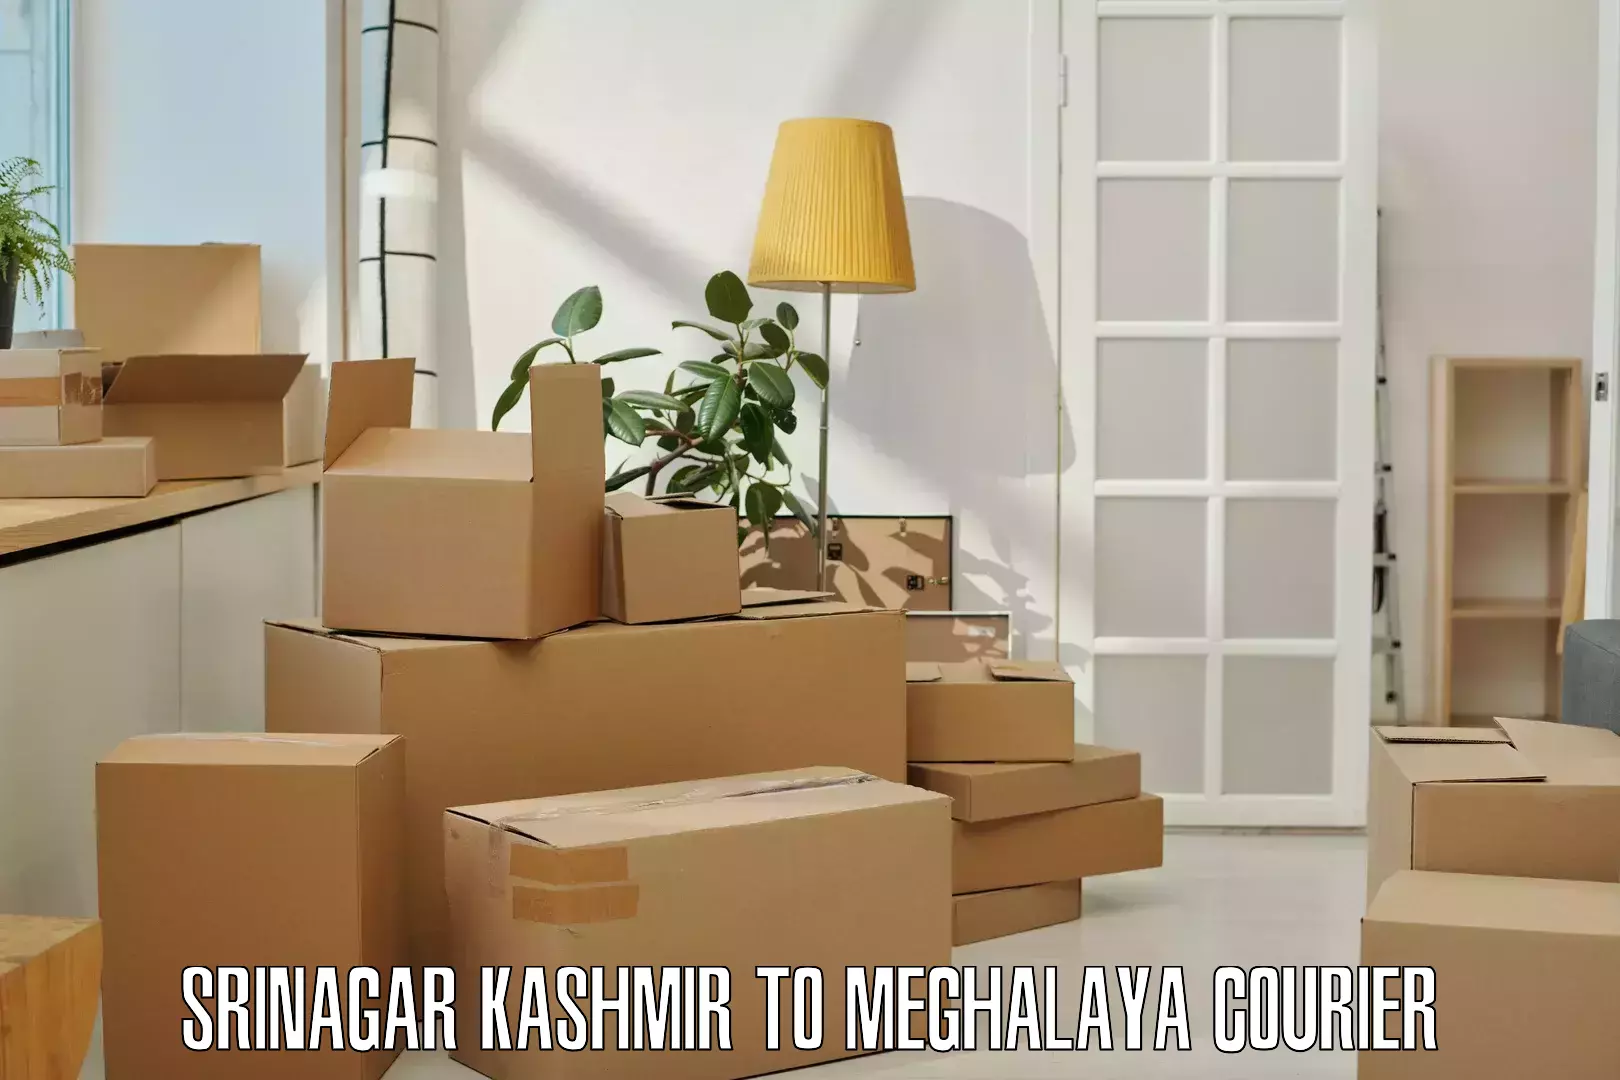 24-hour courier service Srinagar Kashmir to Meghalaya